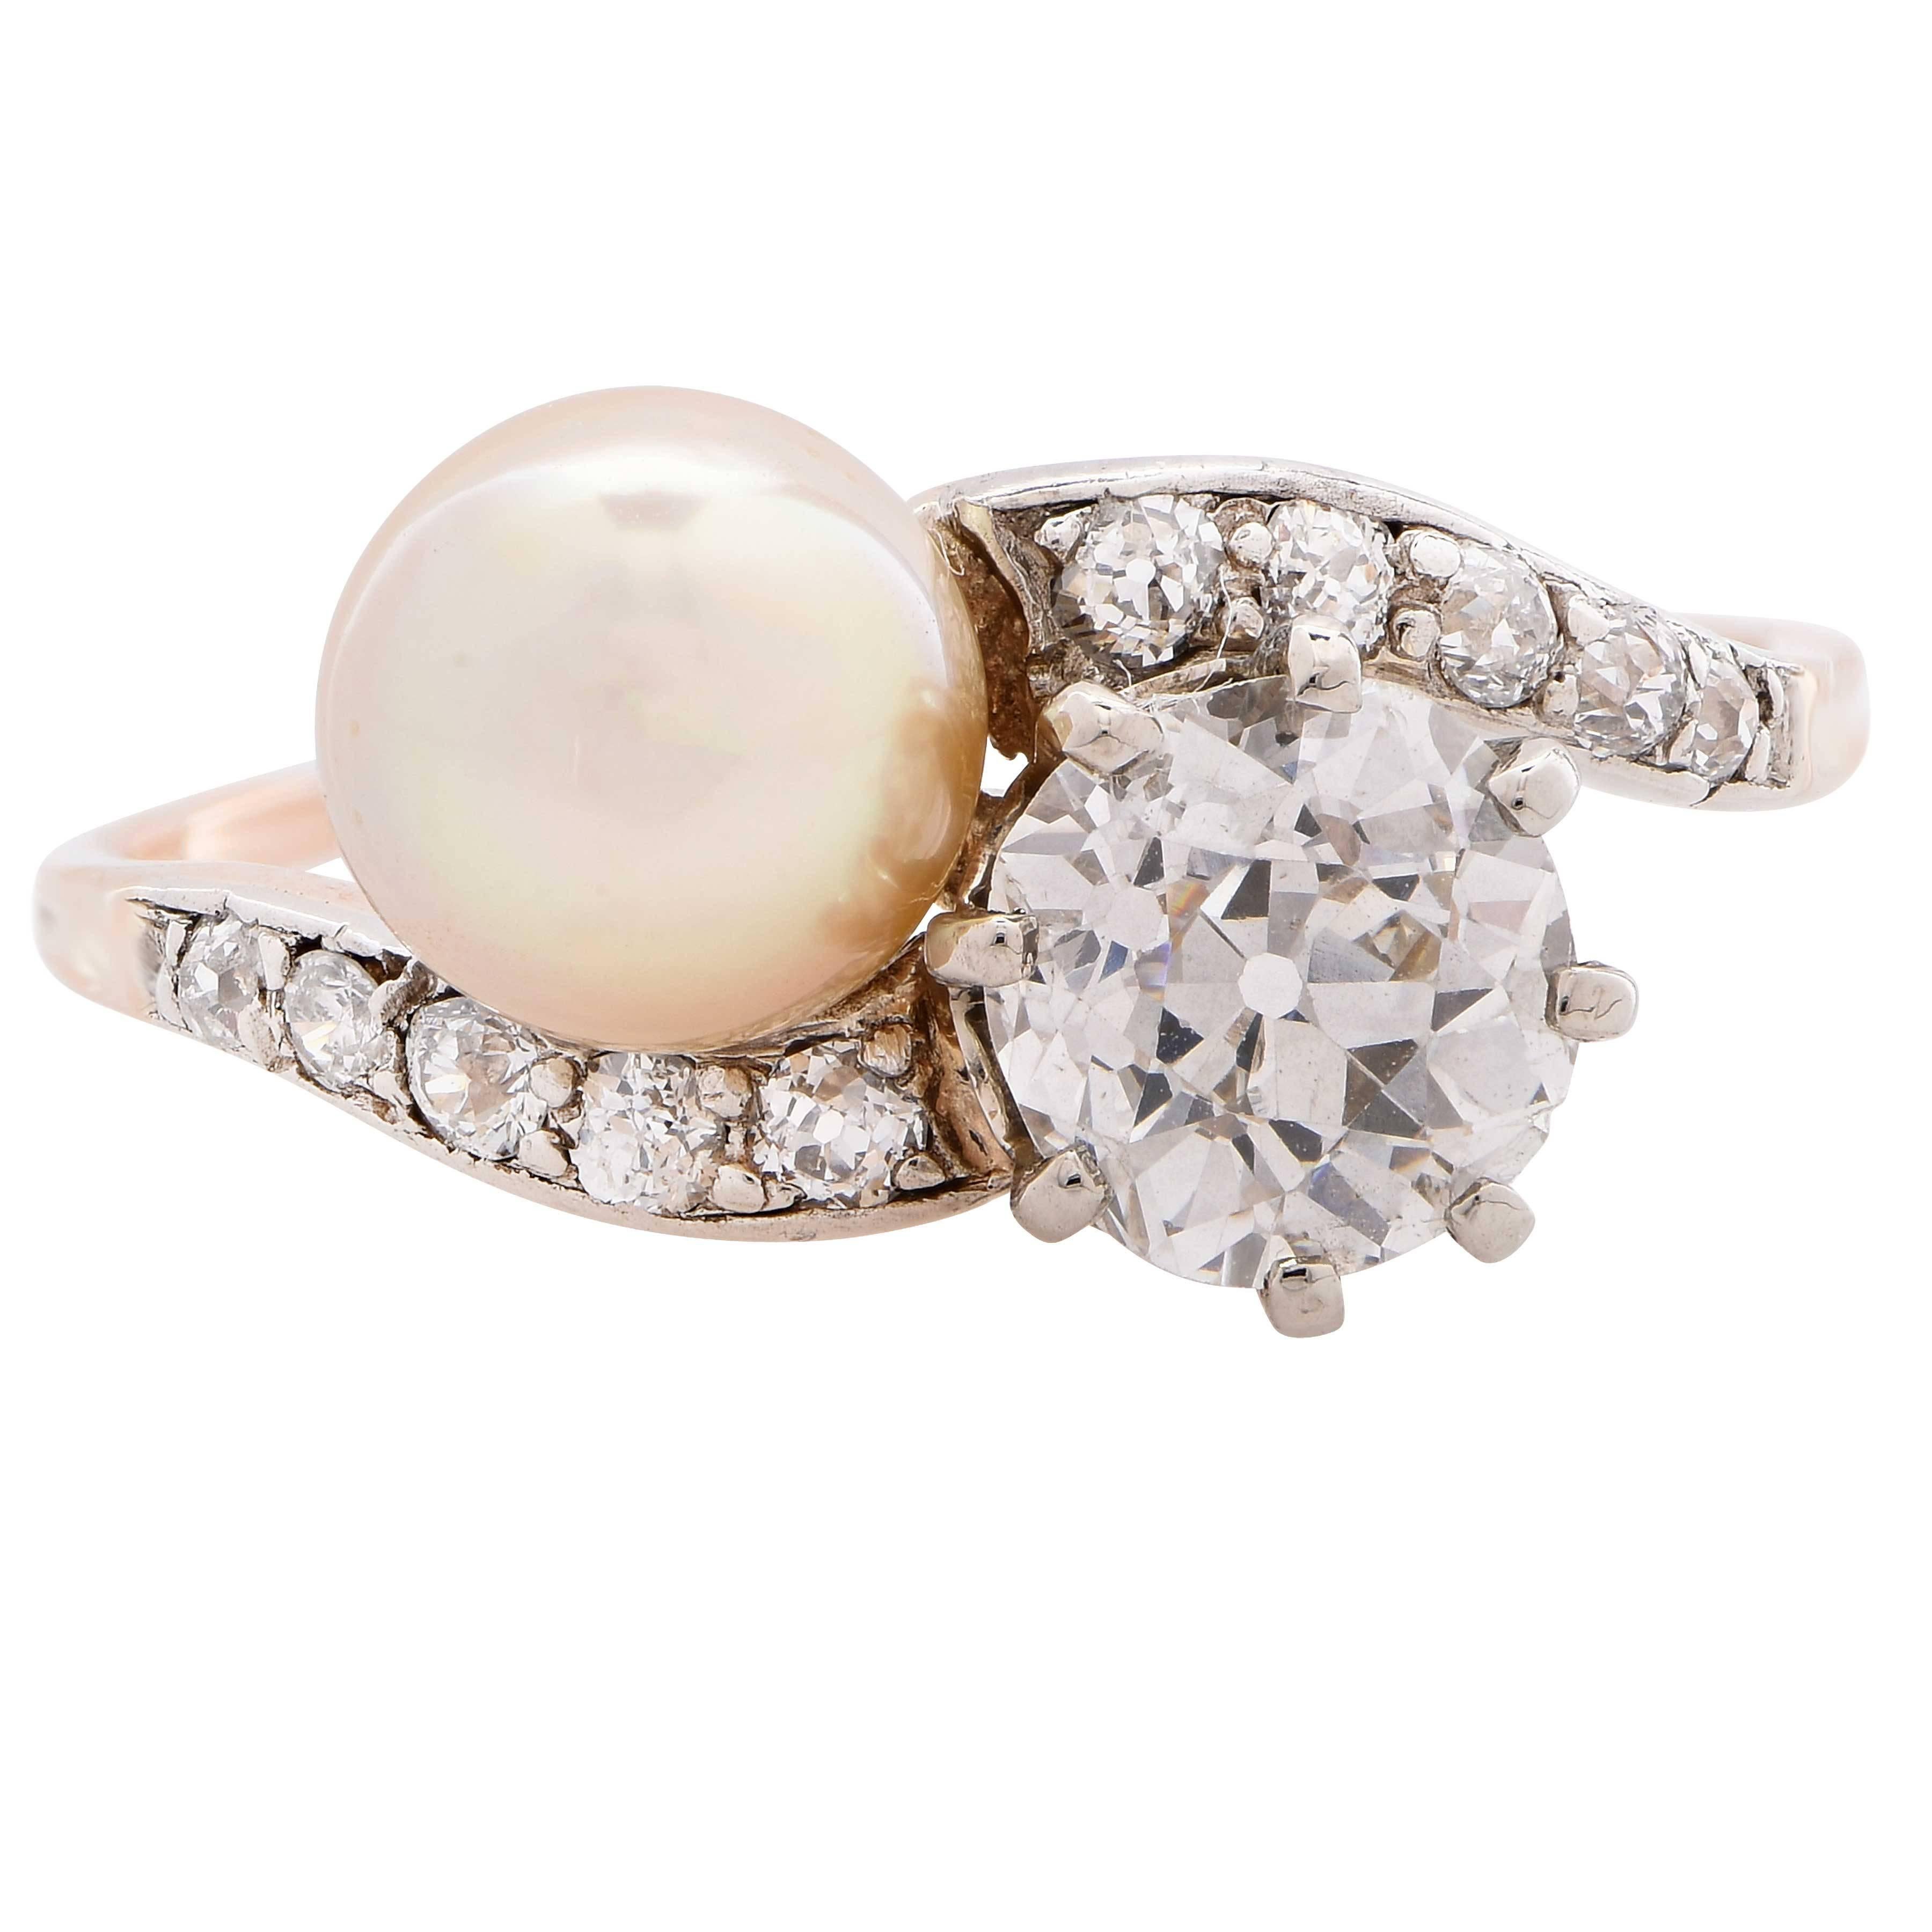 6 carat pearl ring